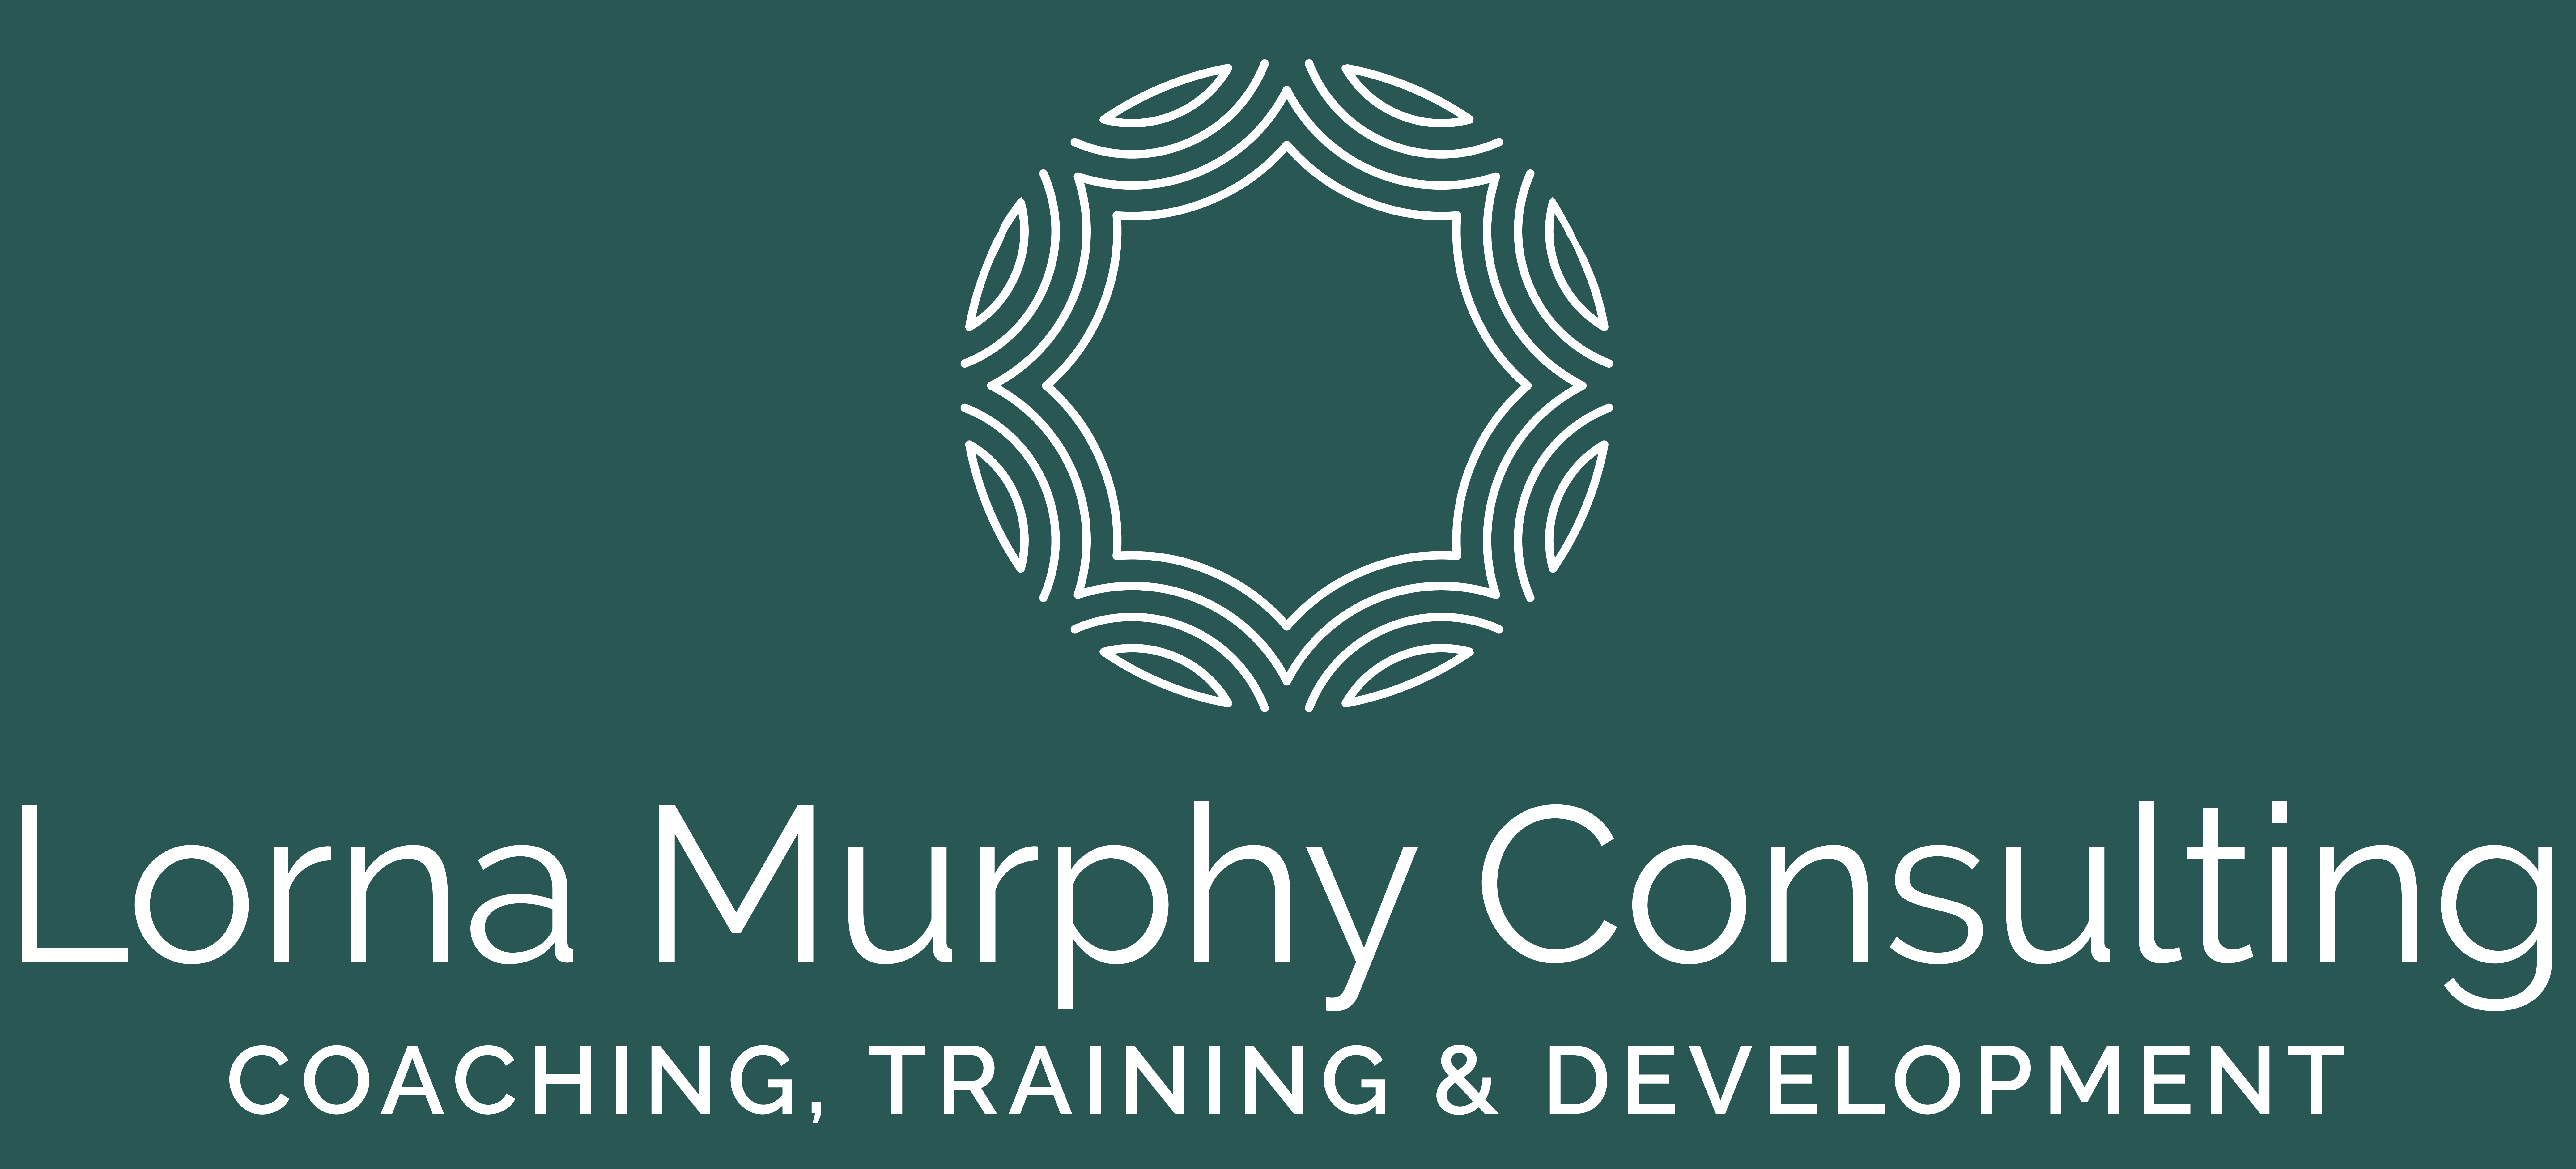 Lorna Murphy Consulting Ltd.